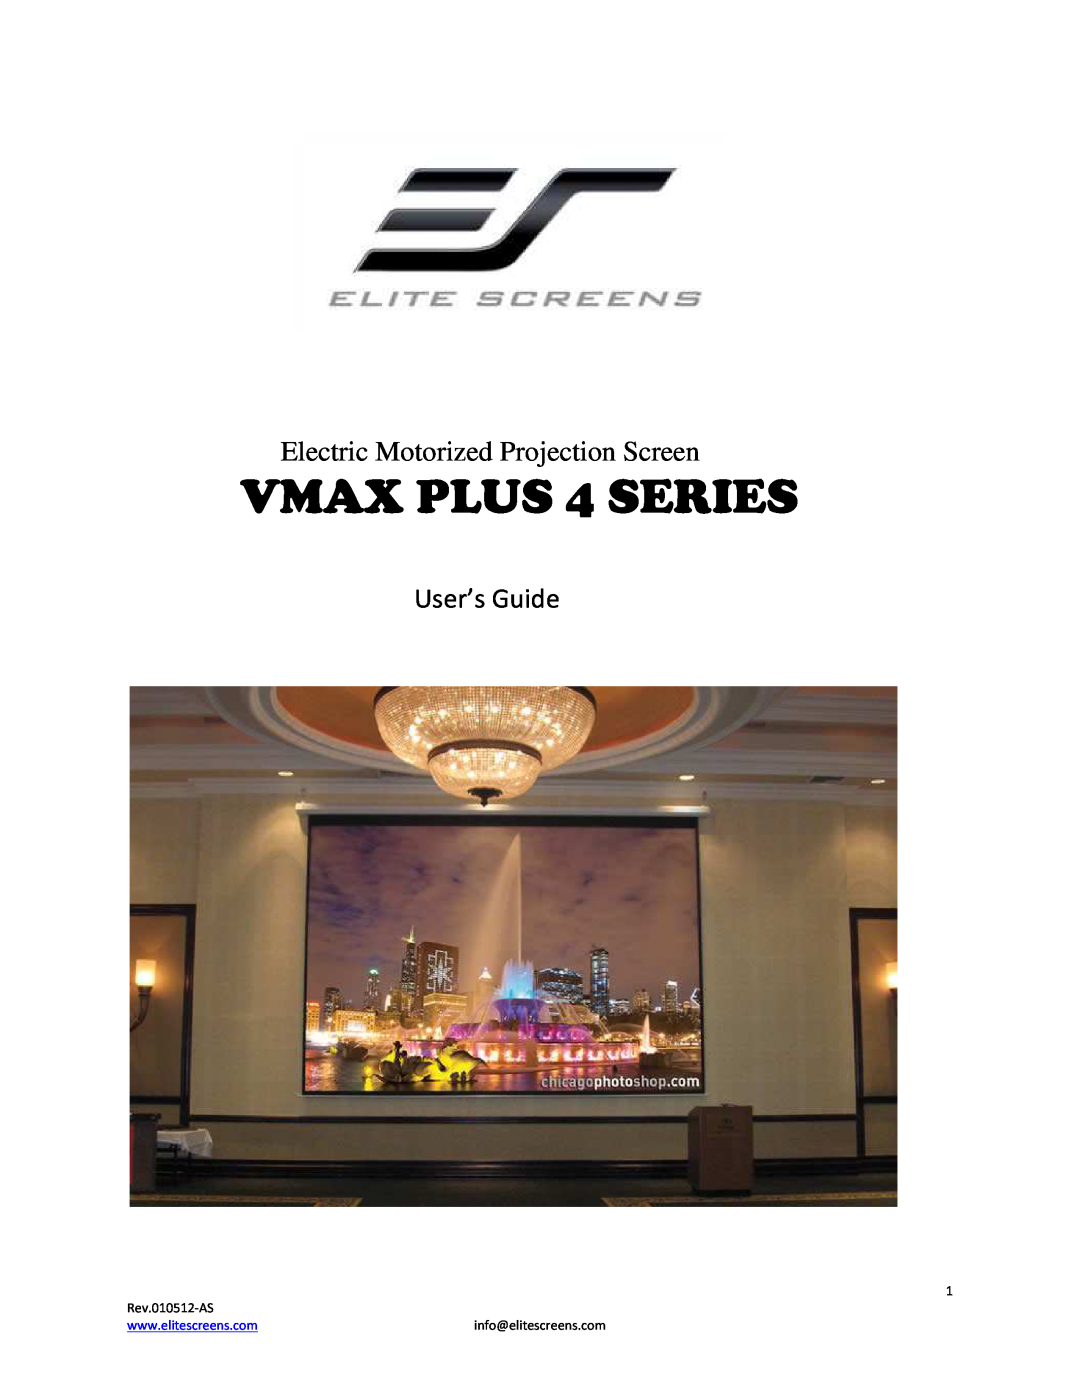 Elite Screens Vmax Plus 4 manual VMAX PLUS 4 SERIES, Electric Motorized Projection Screen, User’s Guide, Rev.010512-AS 